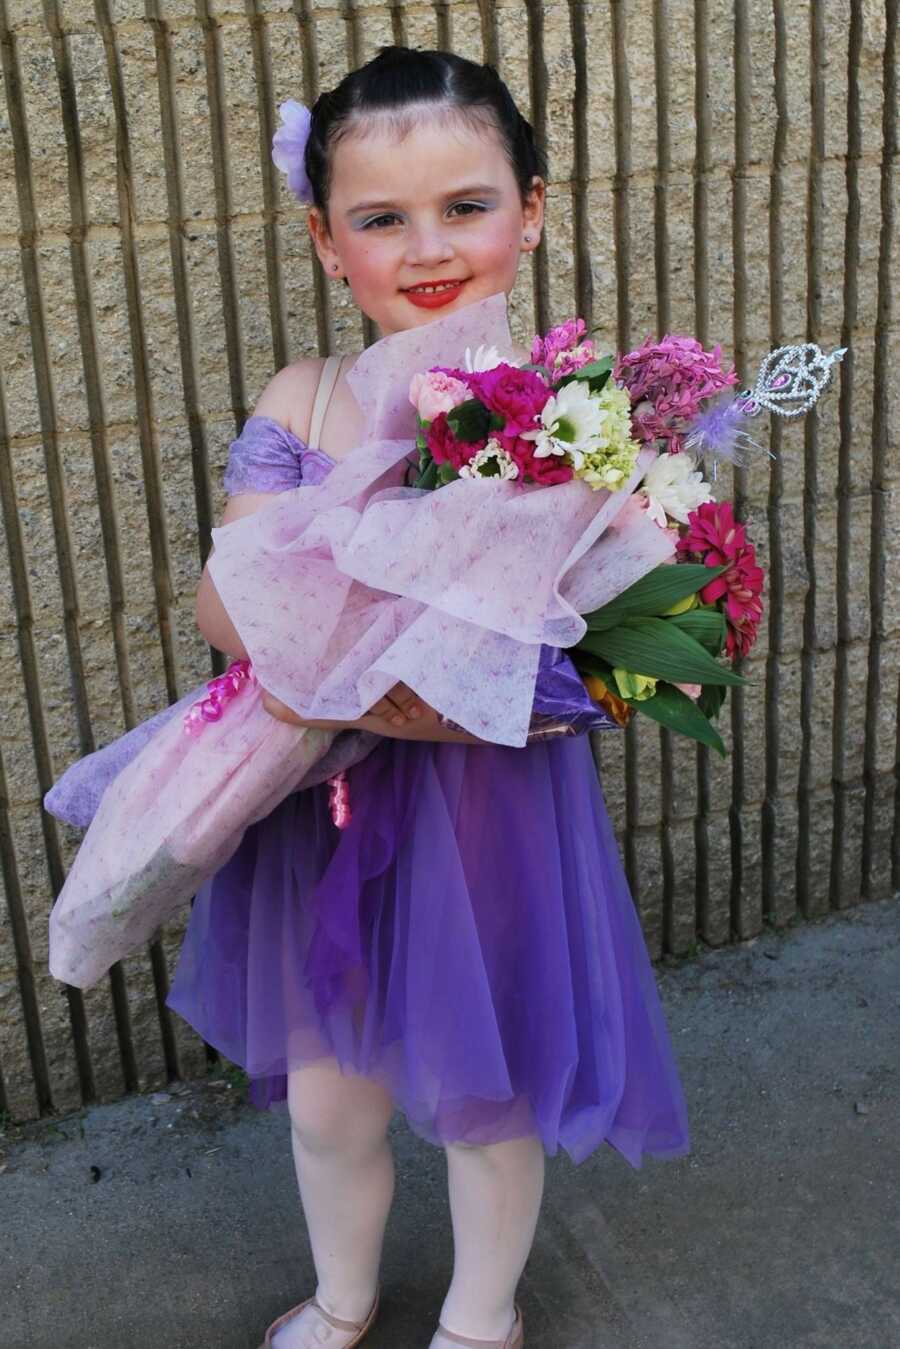 Girl in purple dance dress holding bouqet of flowers